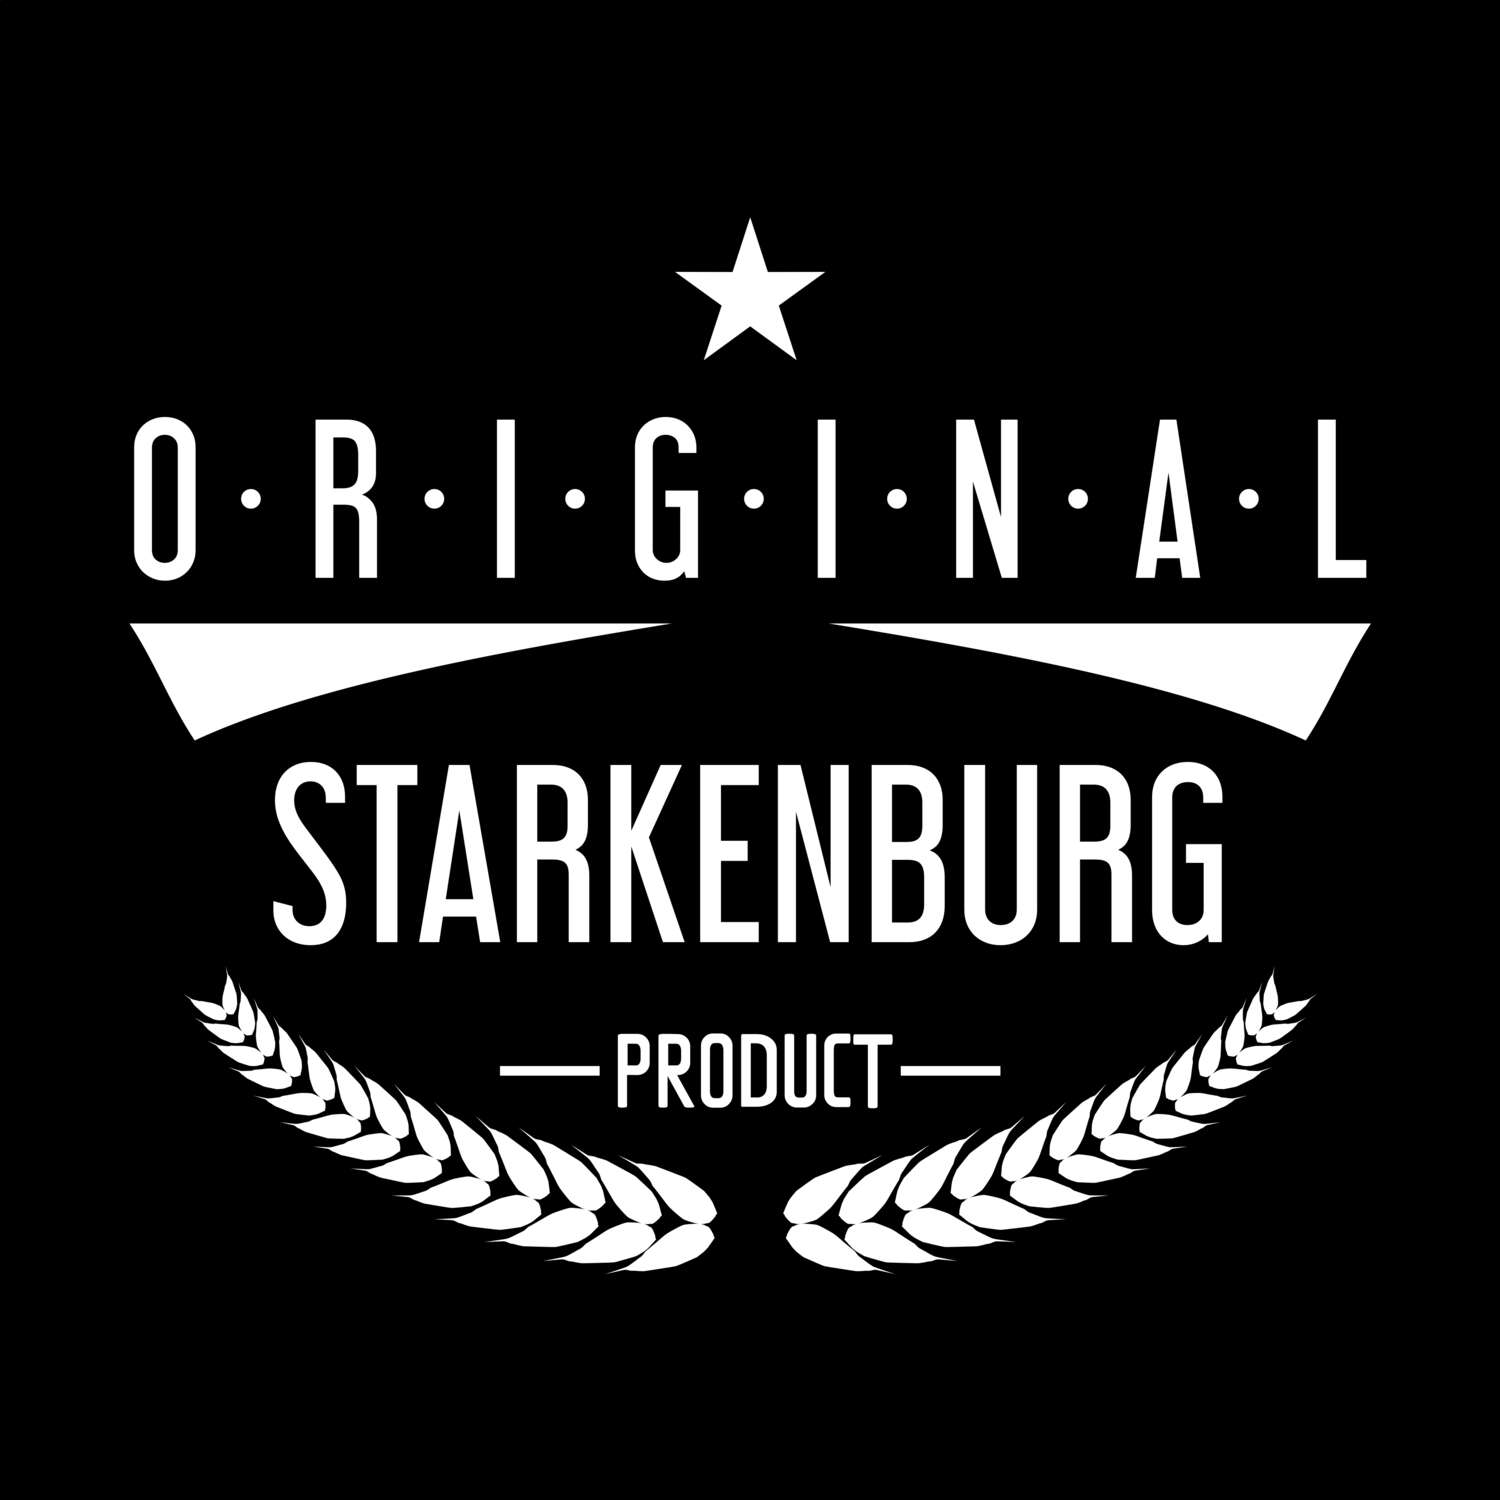 Starkenburg T-Shirt »Original Product«